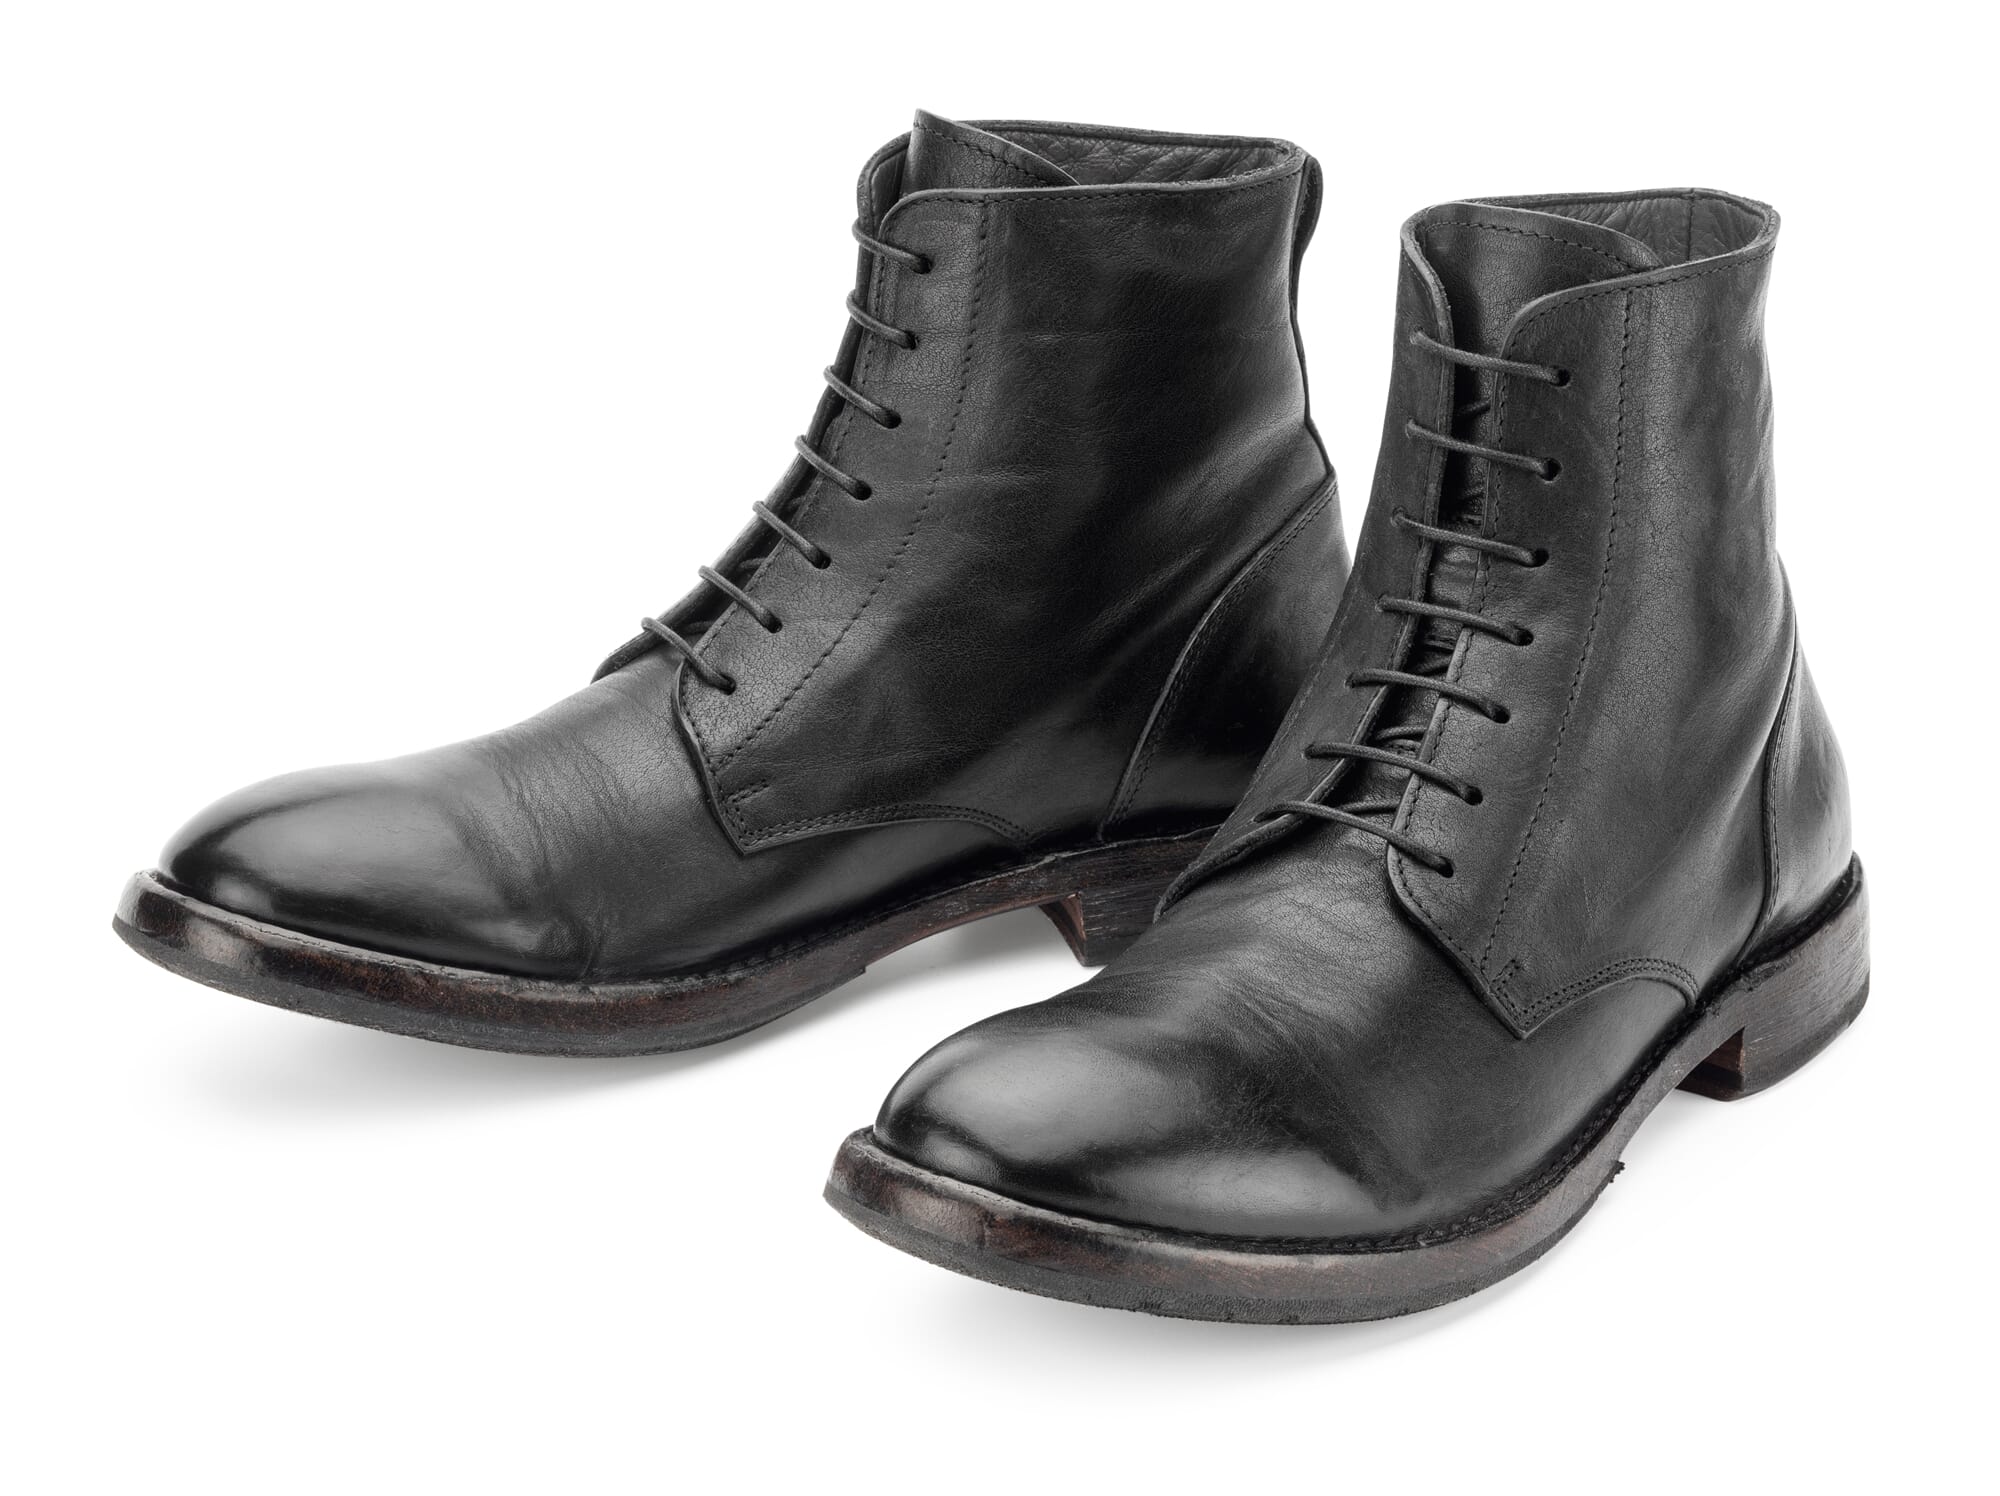 verkiezing Iedereen apotheek Men's lace-up boot, Black | Manufactum